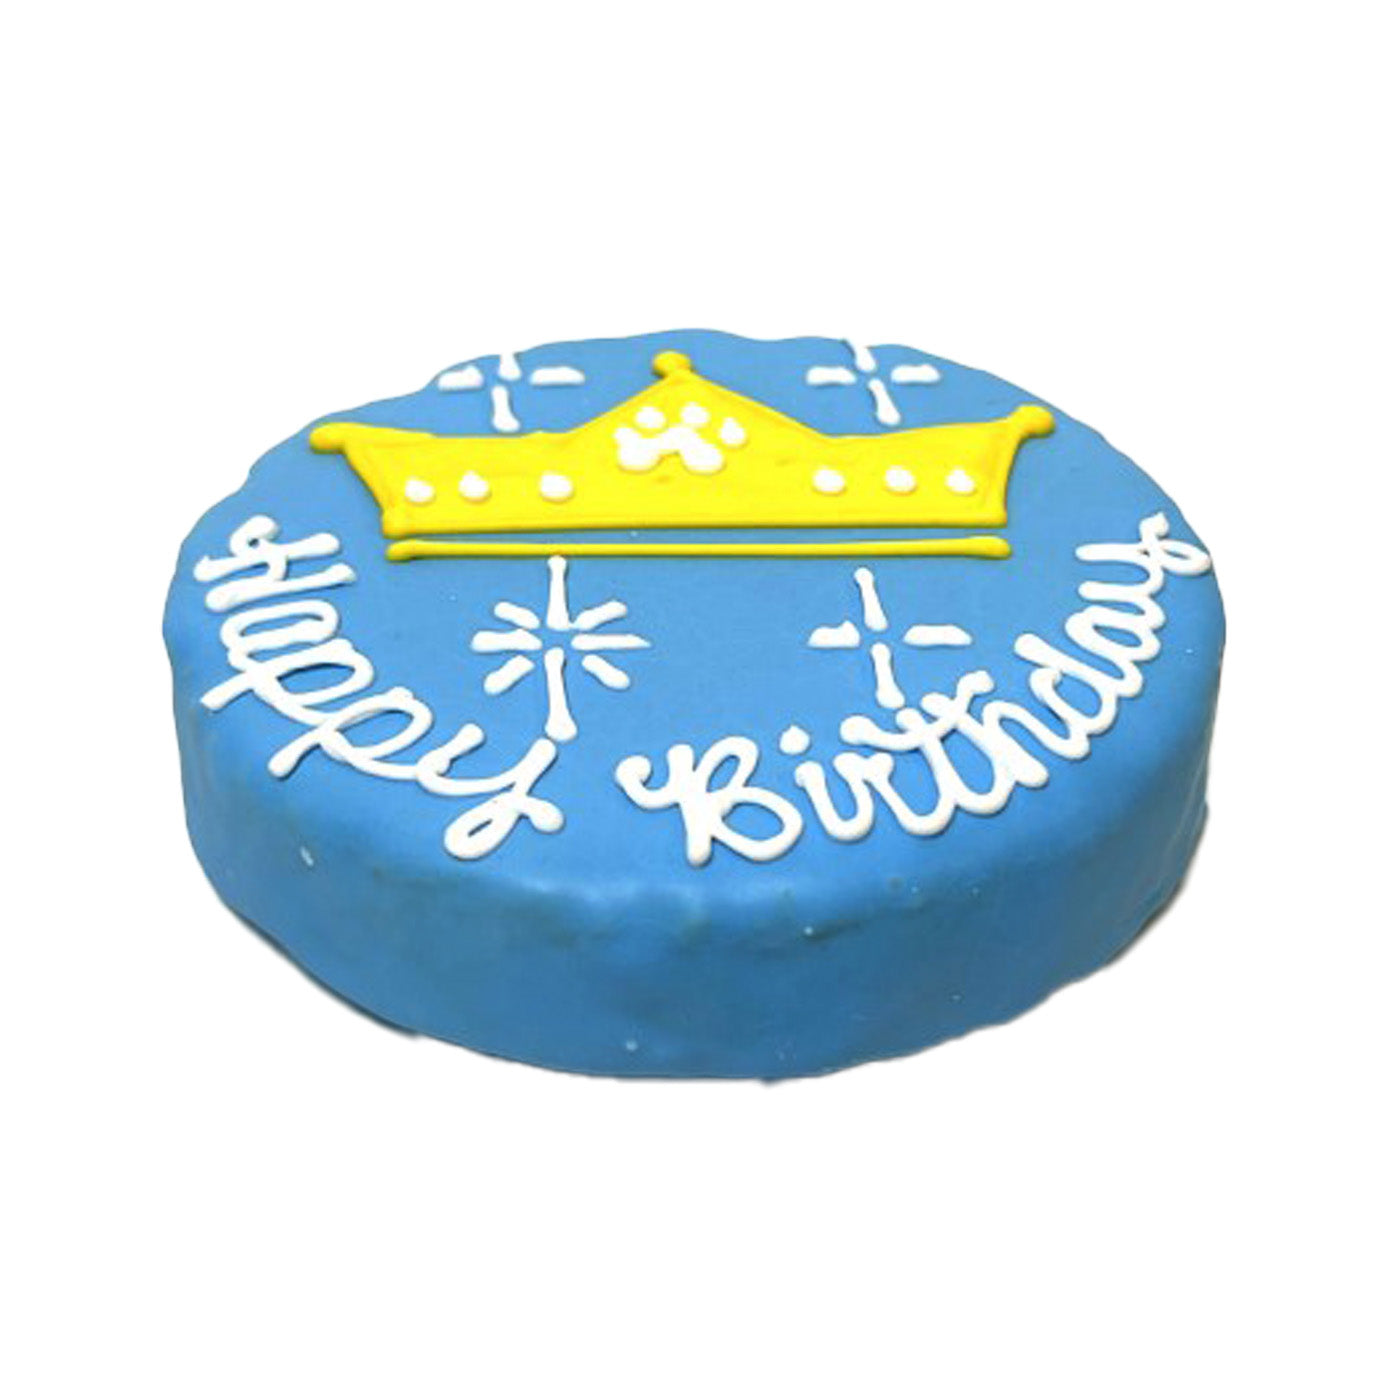 BLUE CROWN CAKE